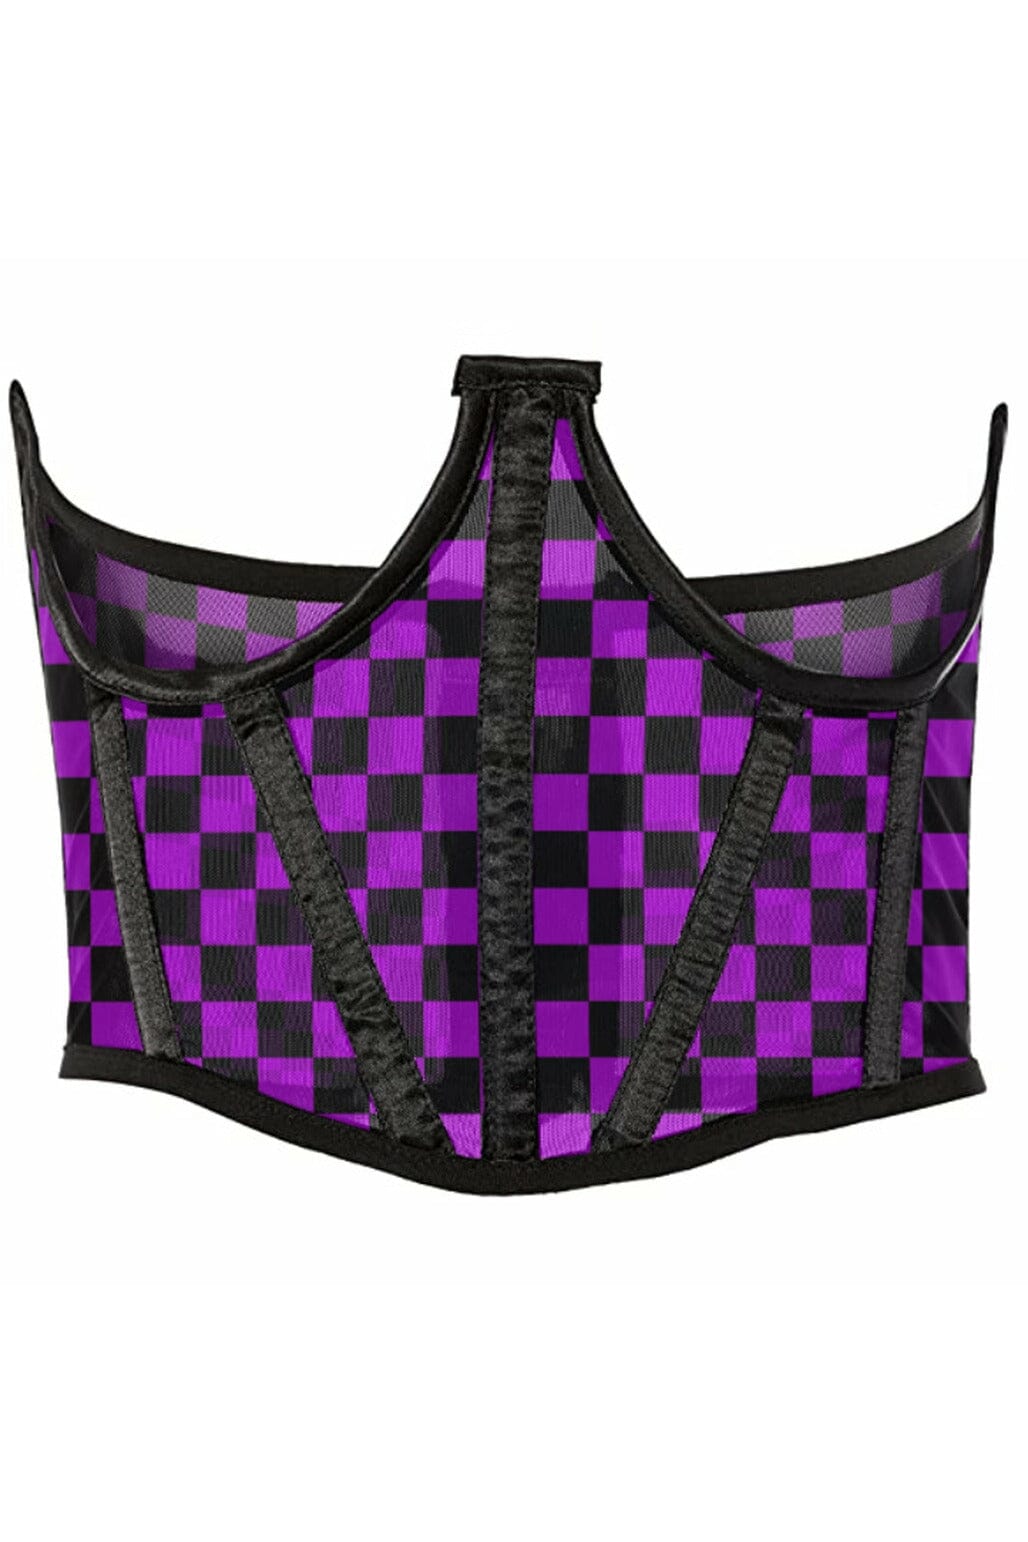 Lavish Neon Purple/Black Checker Print Mesh Open Cup Waist Cincher-Waist Cinchers-Daisy Corsets-Purple-S-SEXYSHOES.COM